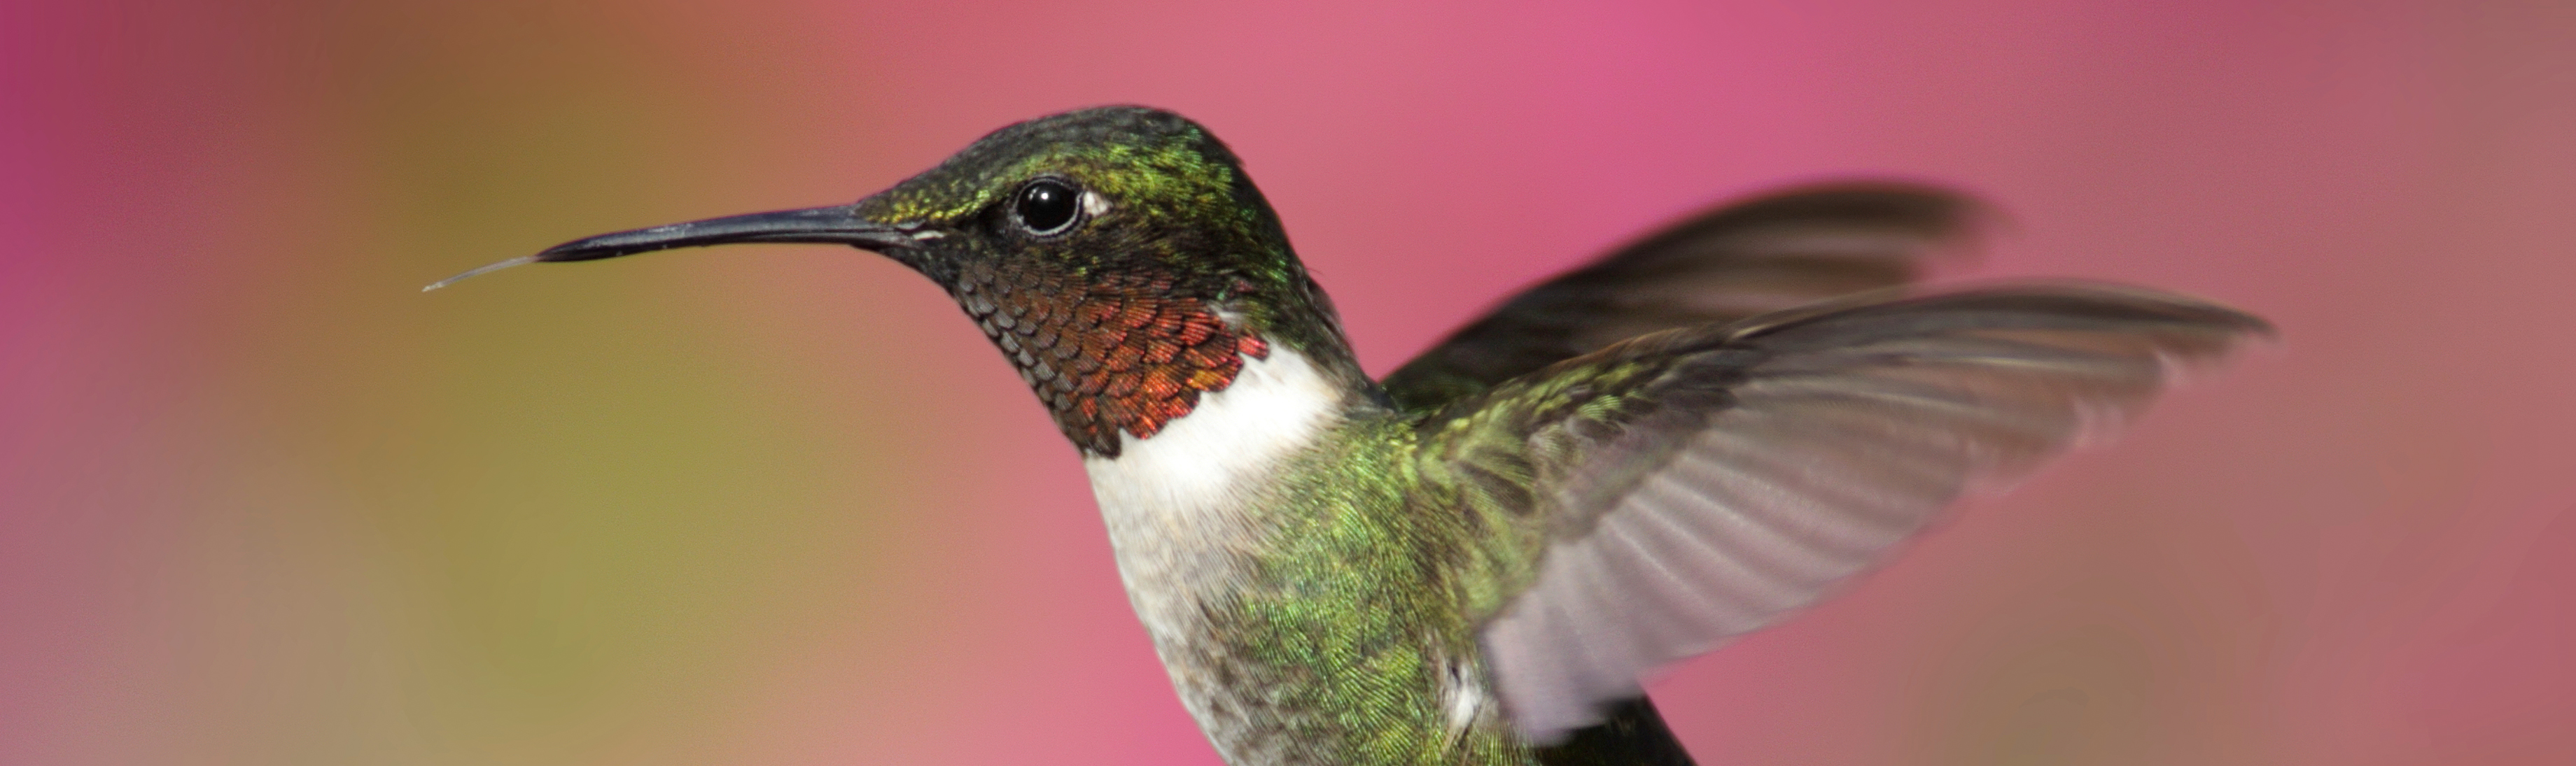 Ruby-Throated Hummingbird (Archilochus colubris) | Rainforest Alliance